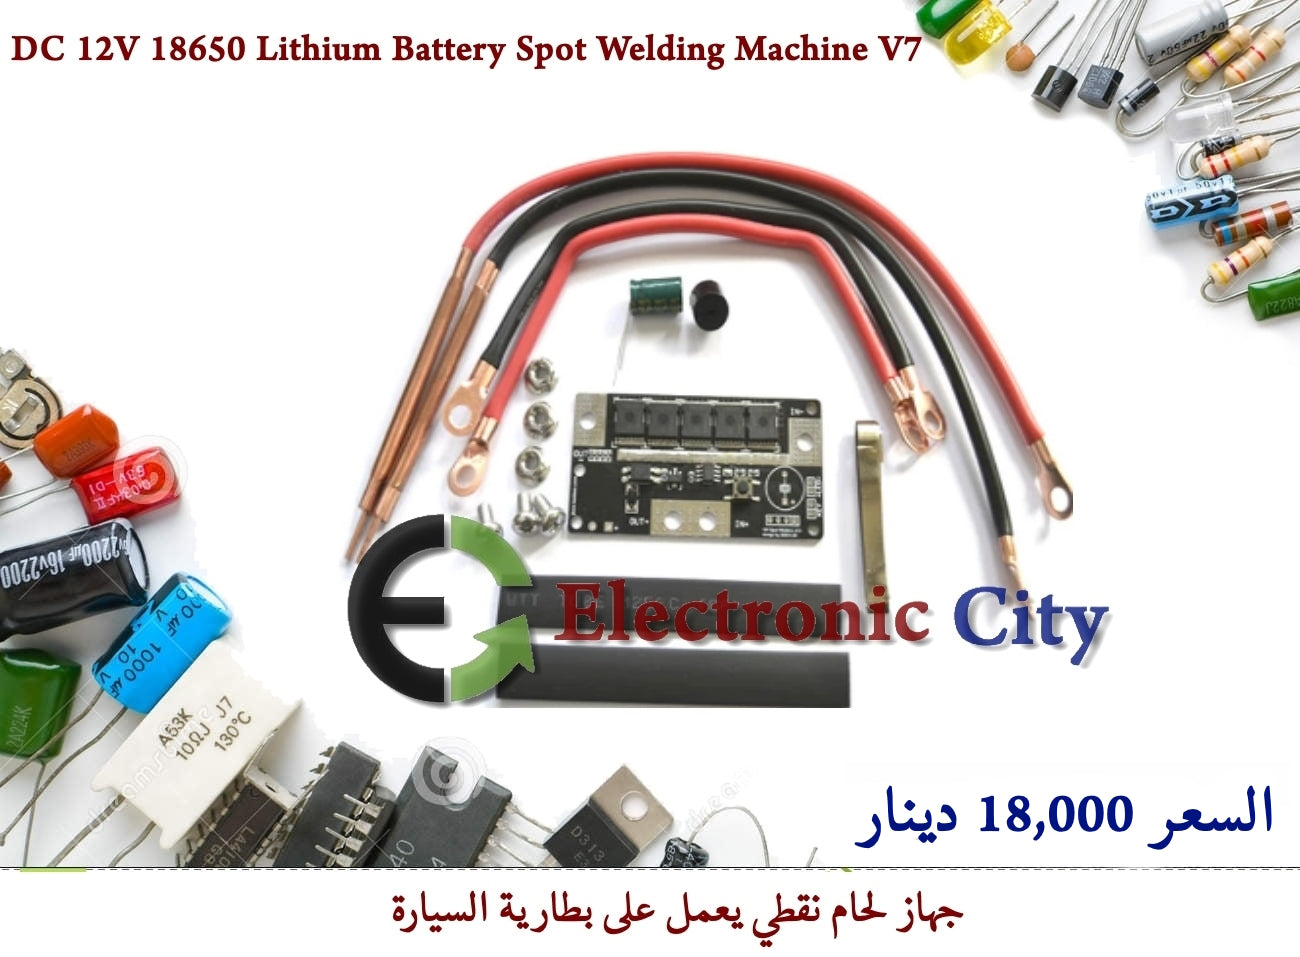 DC 12V 18650 Lithium Battery Spot Welding Machine V7 #R7 YC0006